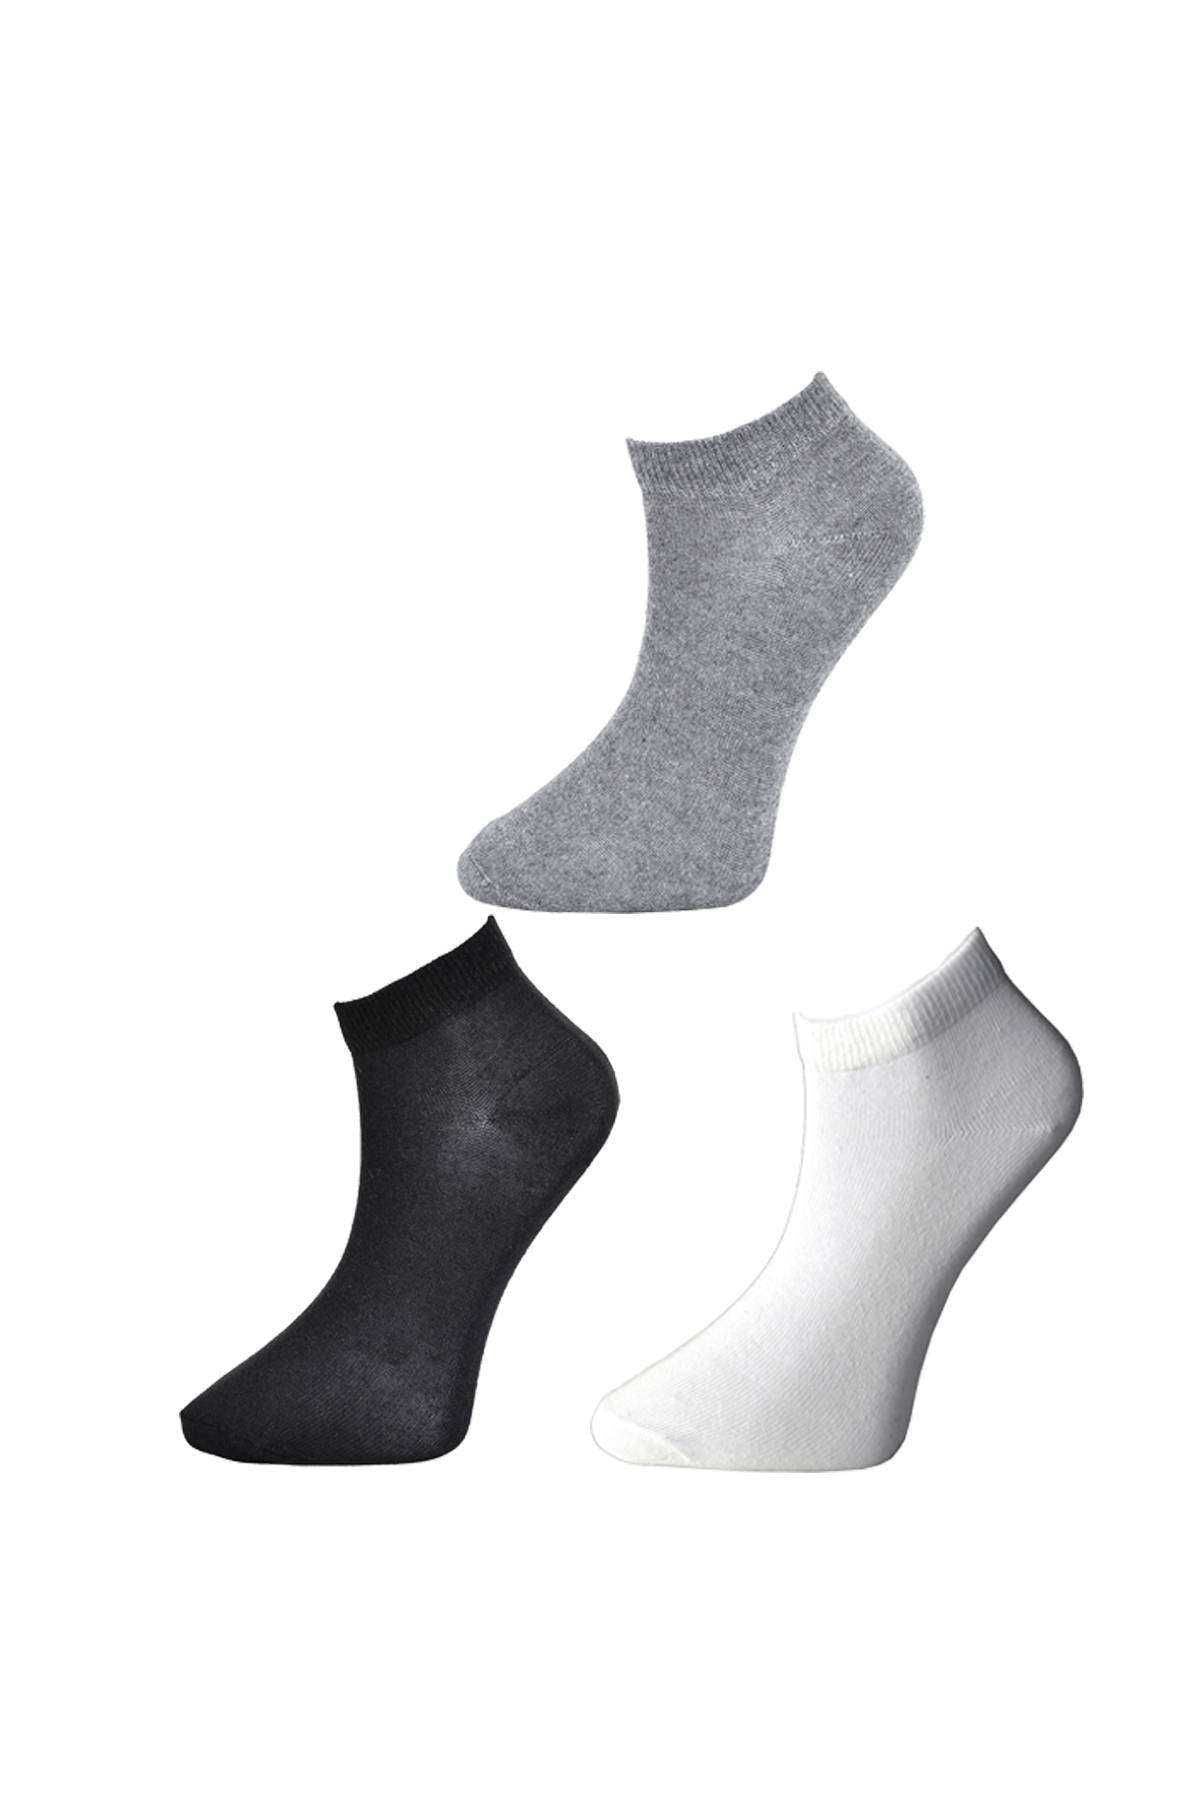 Black Grey And White Women's Ankle Socks 15 Pairs Piamoda